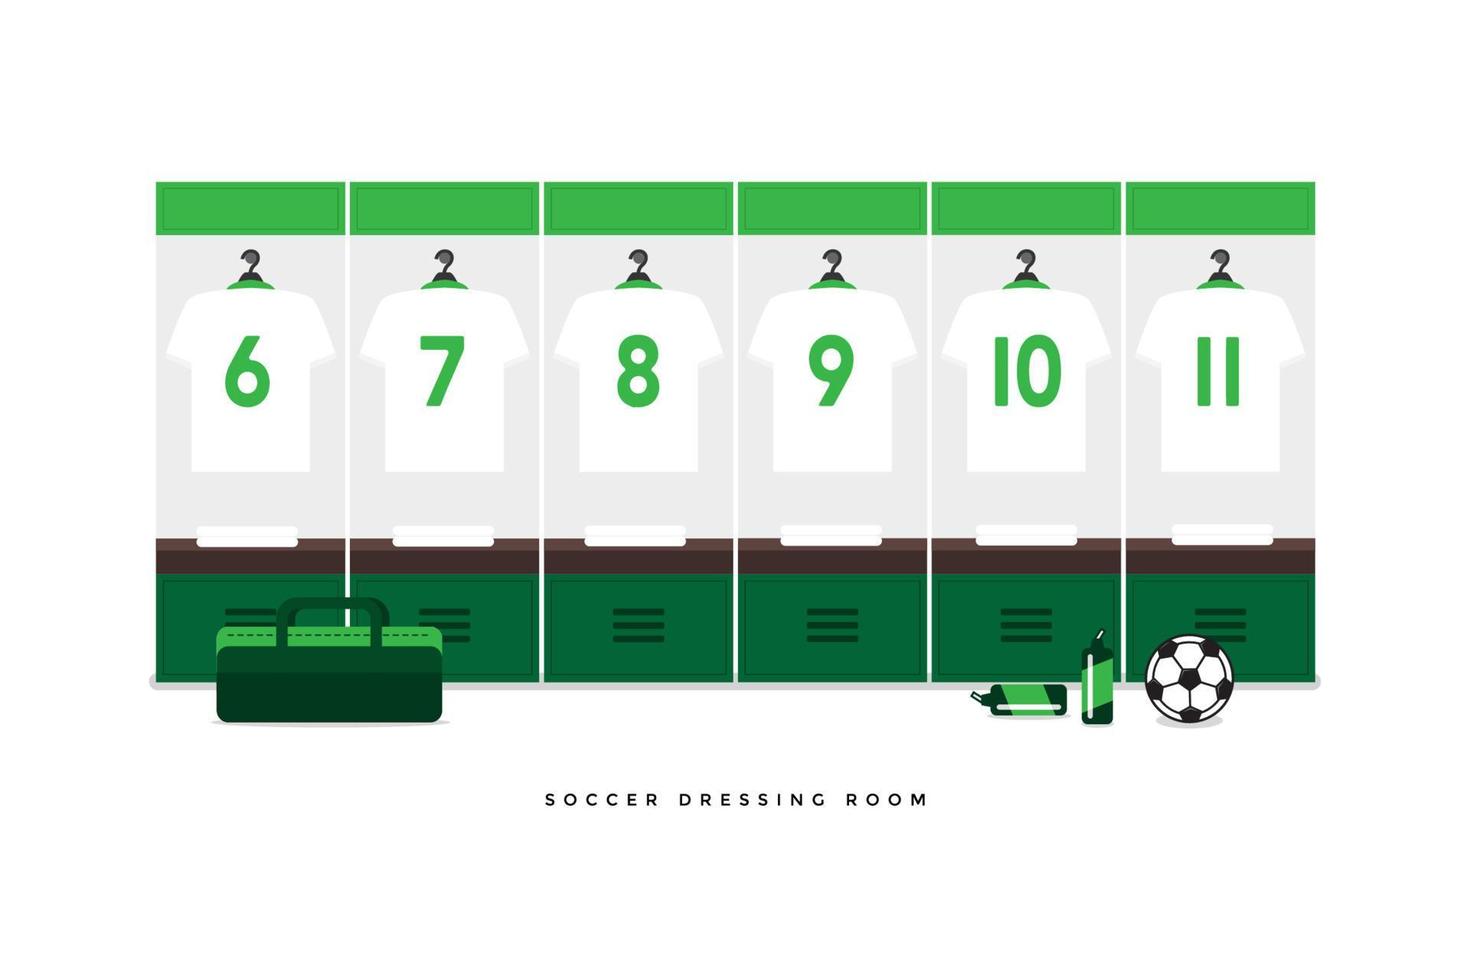 Saudi Arabia Football or soccer team dressing room. vector